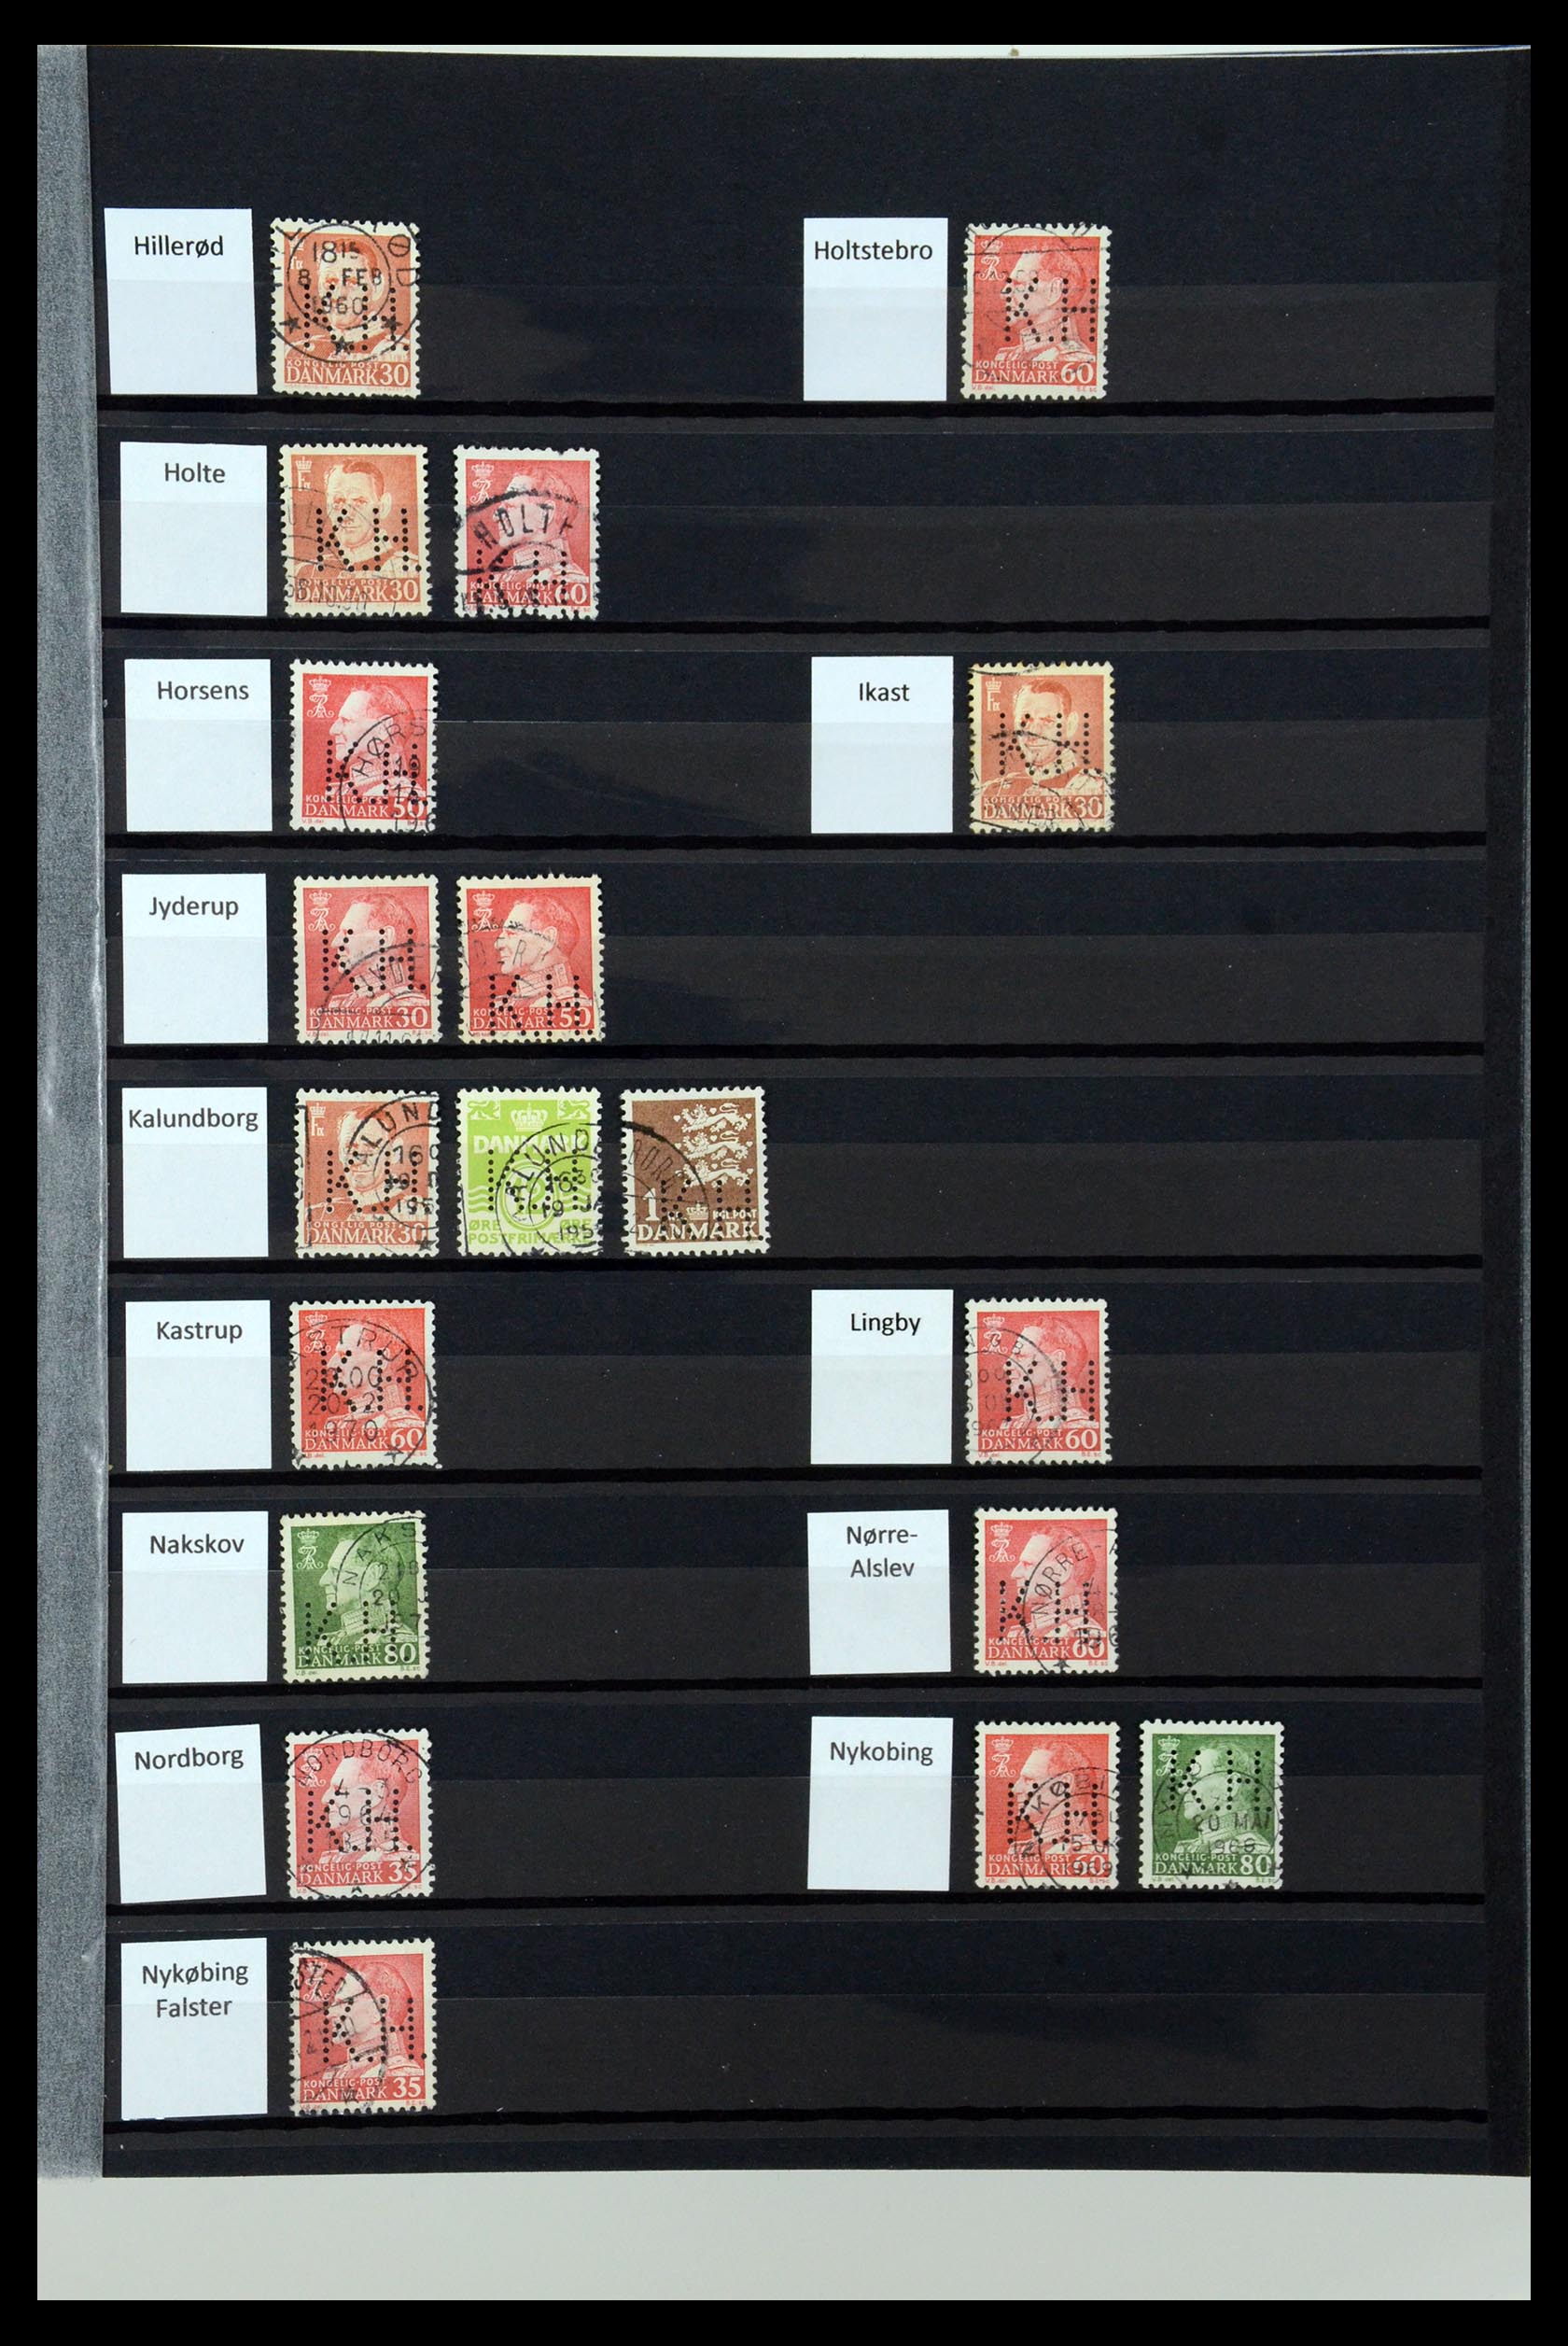 36396 084 - Stamp collection 36396 Denmark perfins.